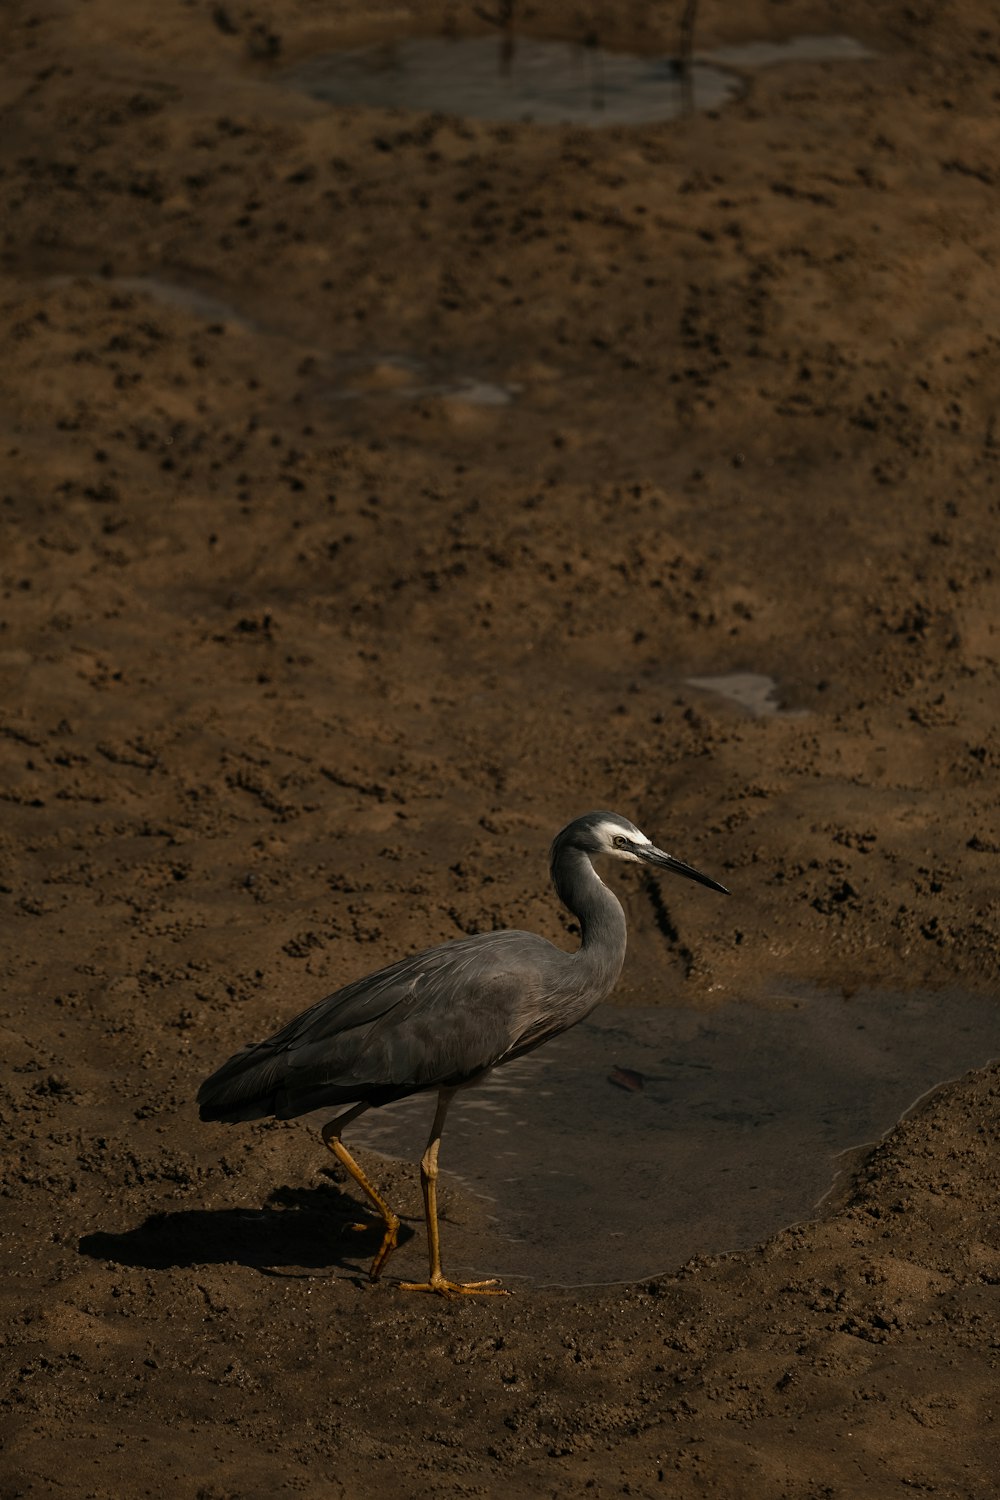 a bird with a long beak standing in the dirt